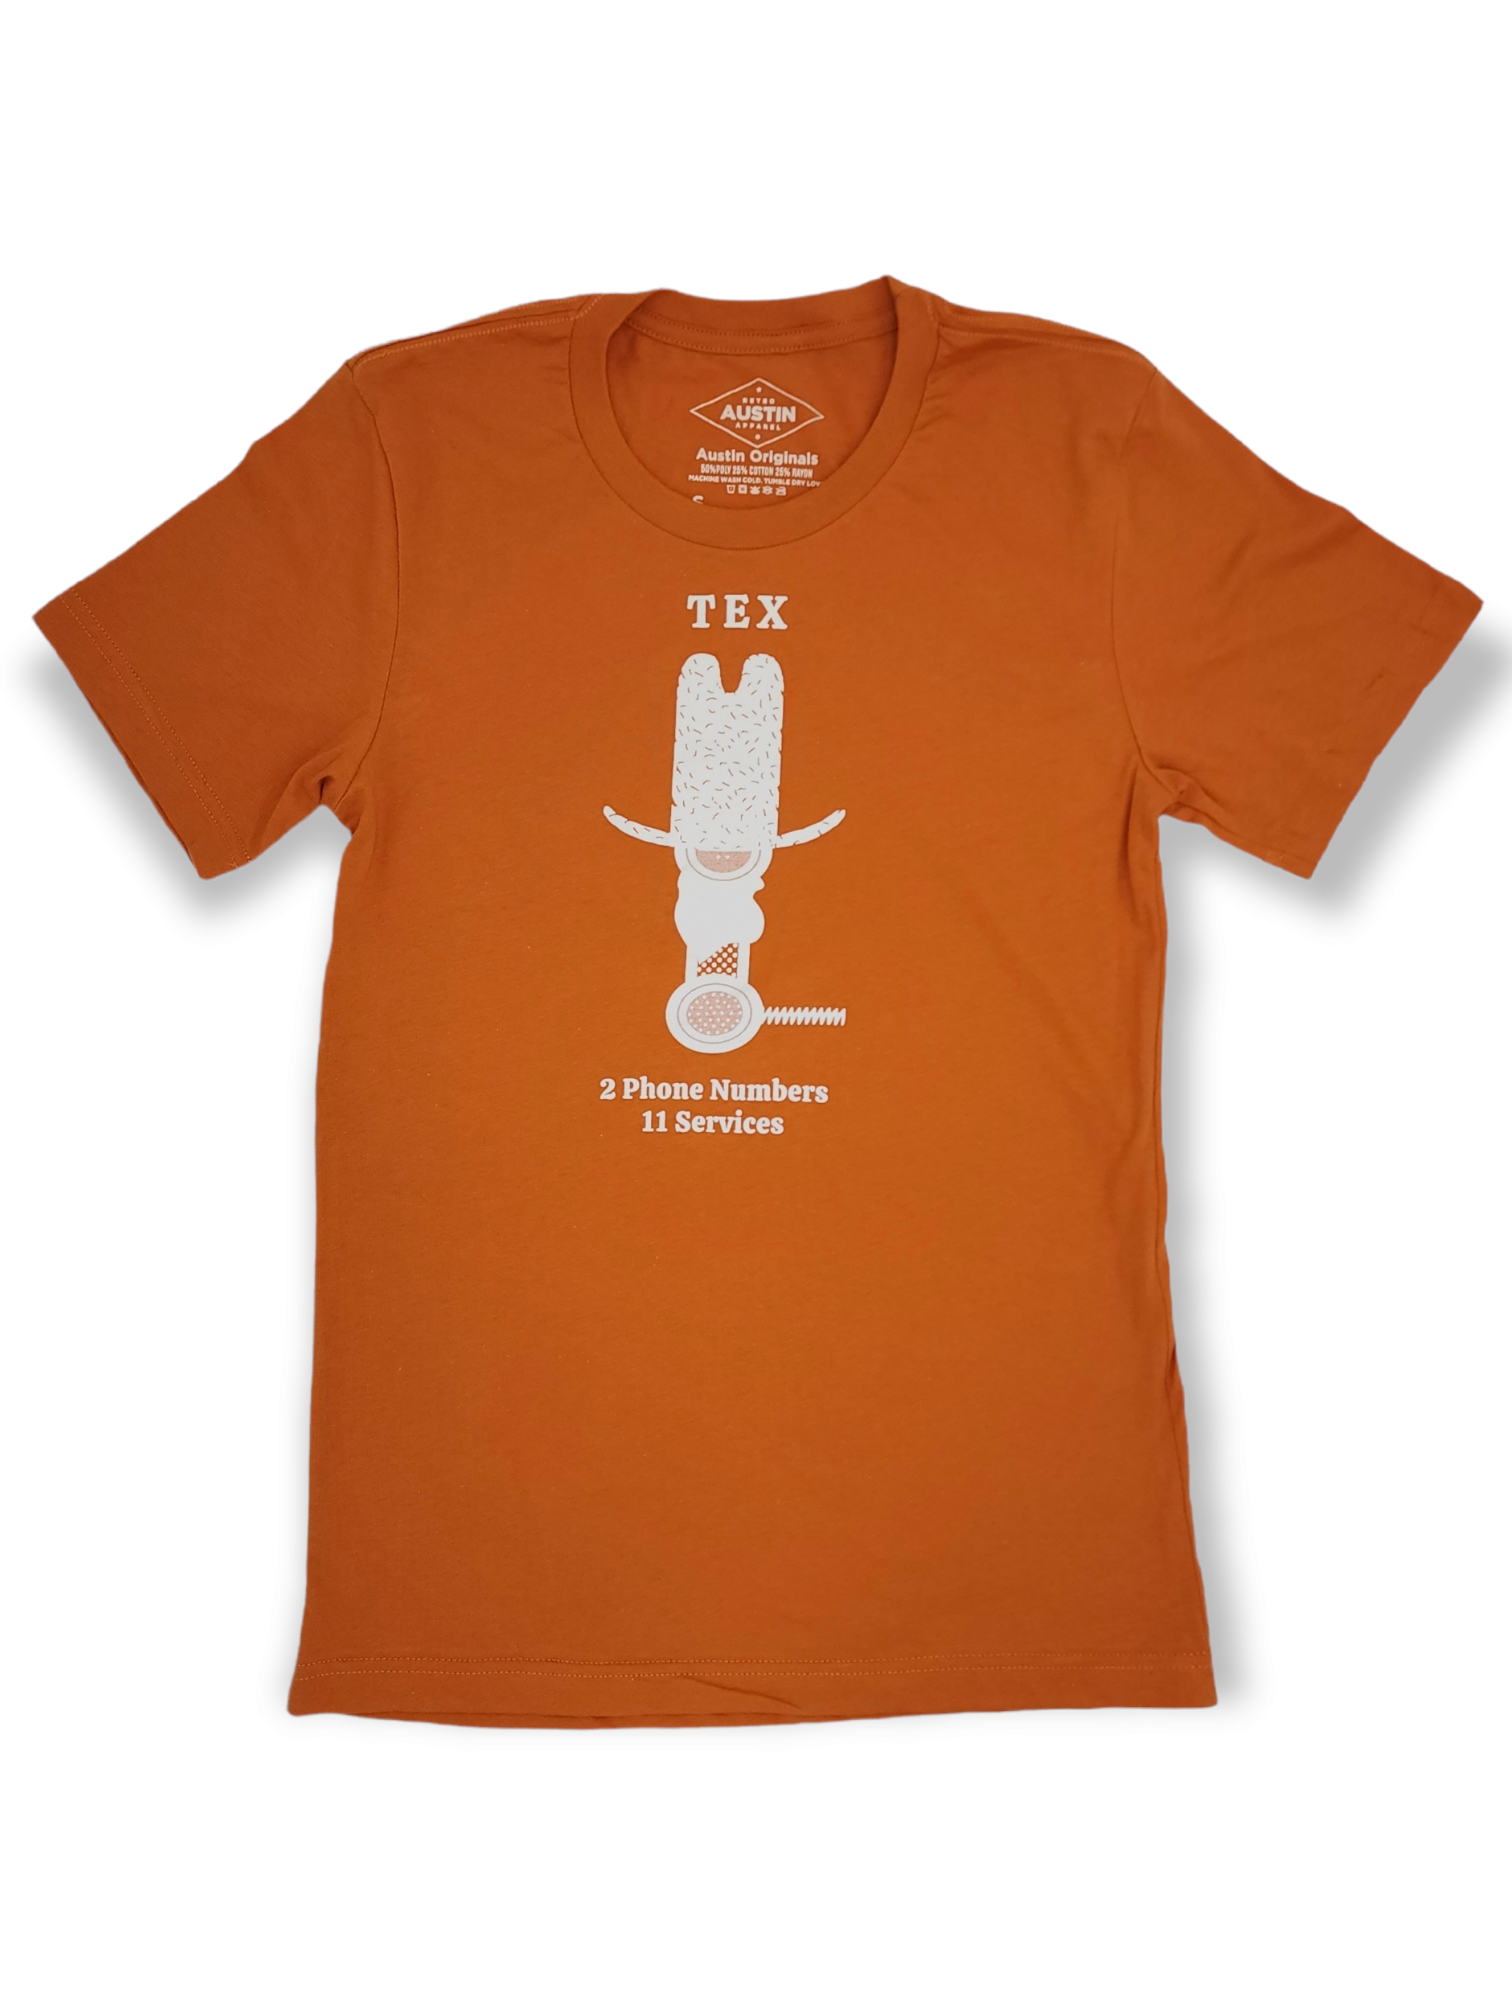 TEX Retro Tee - Texas Orange